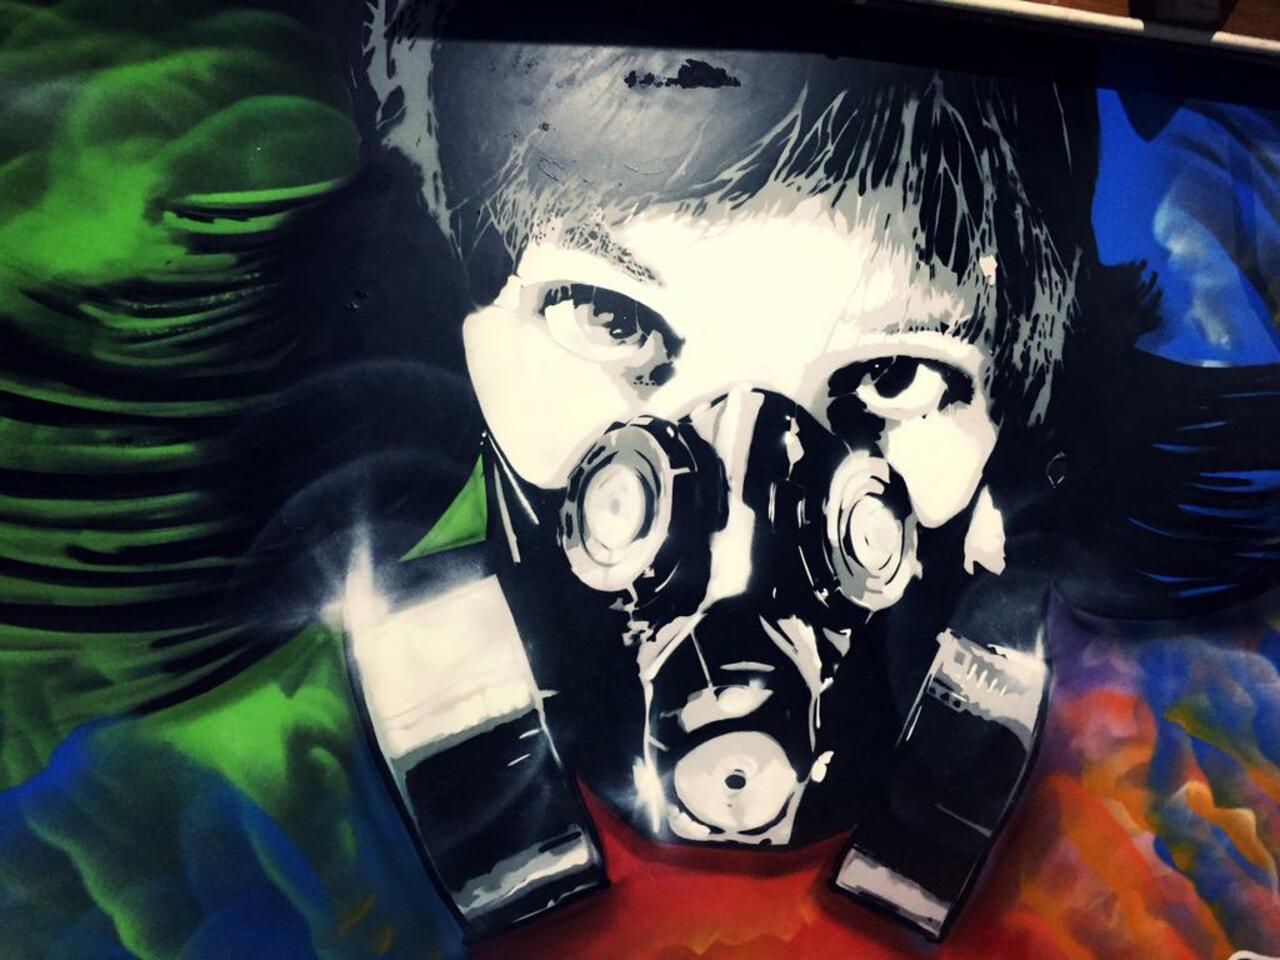 Getting gassed in #bangor today #streetart #stencil #graffiti #mural #visualwaste http://t.co/VatU8JOF0O